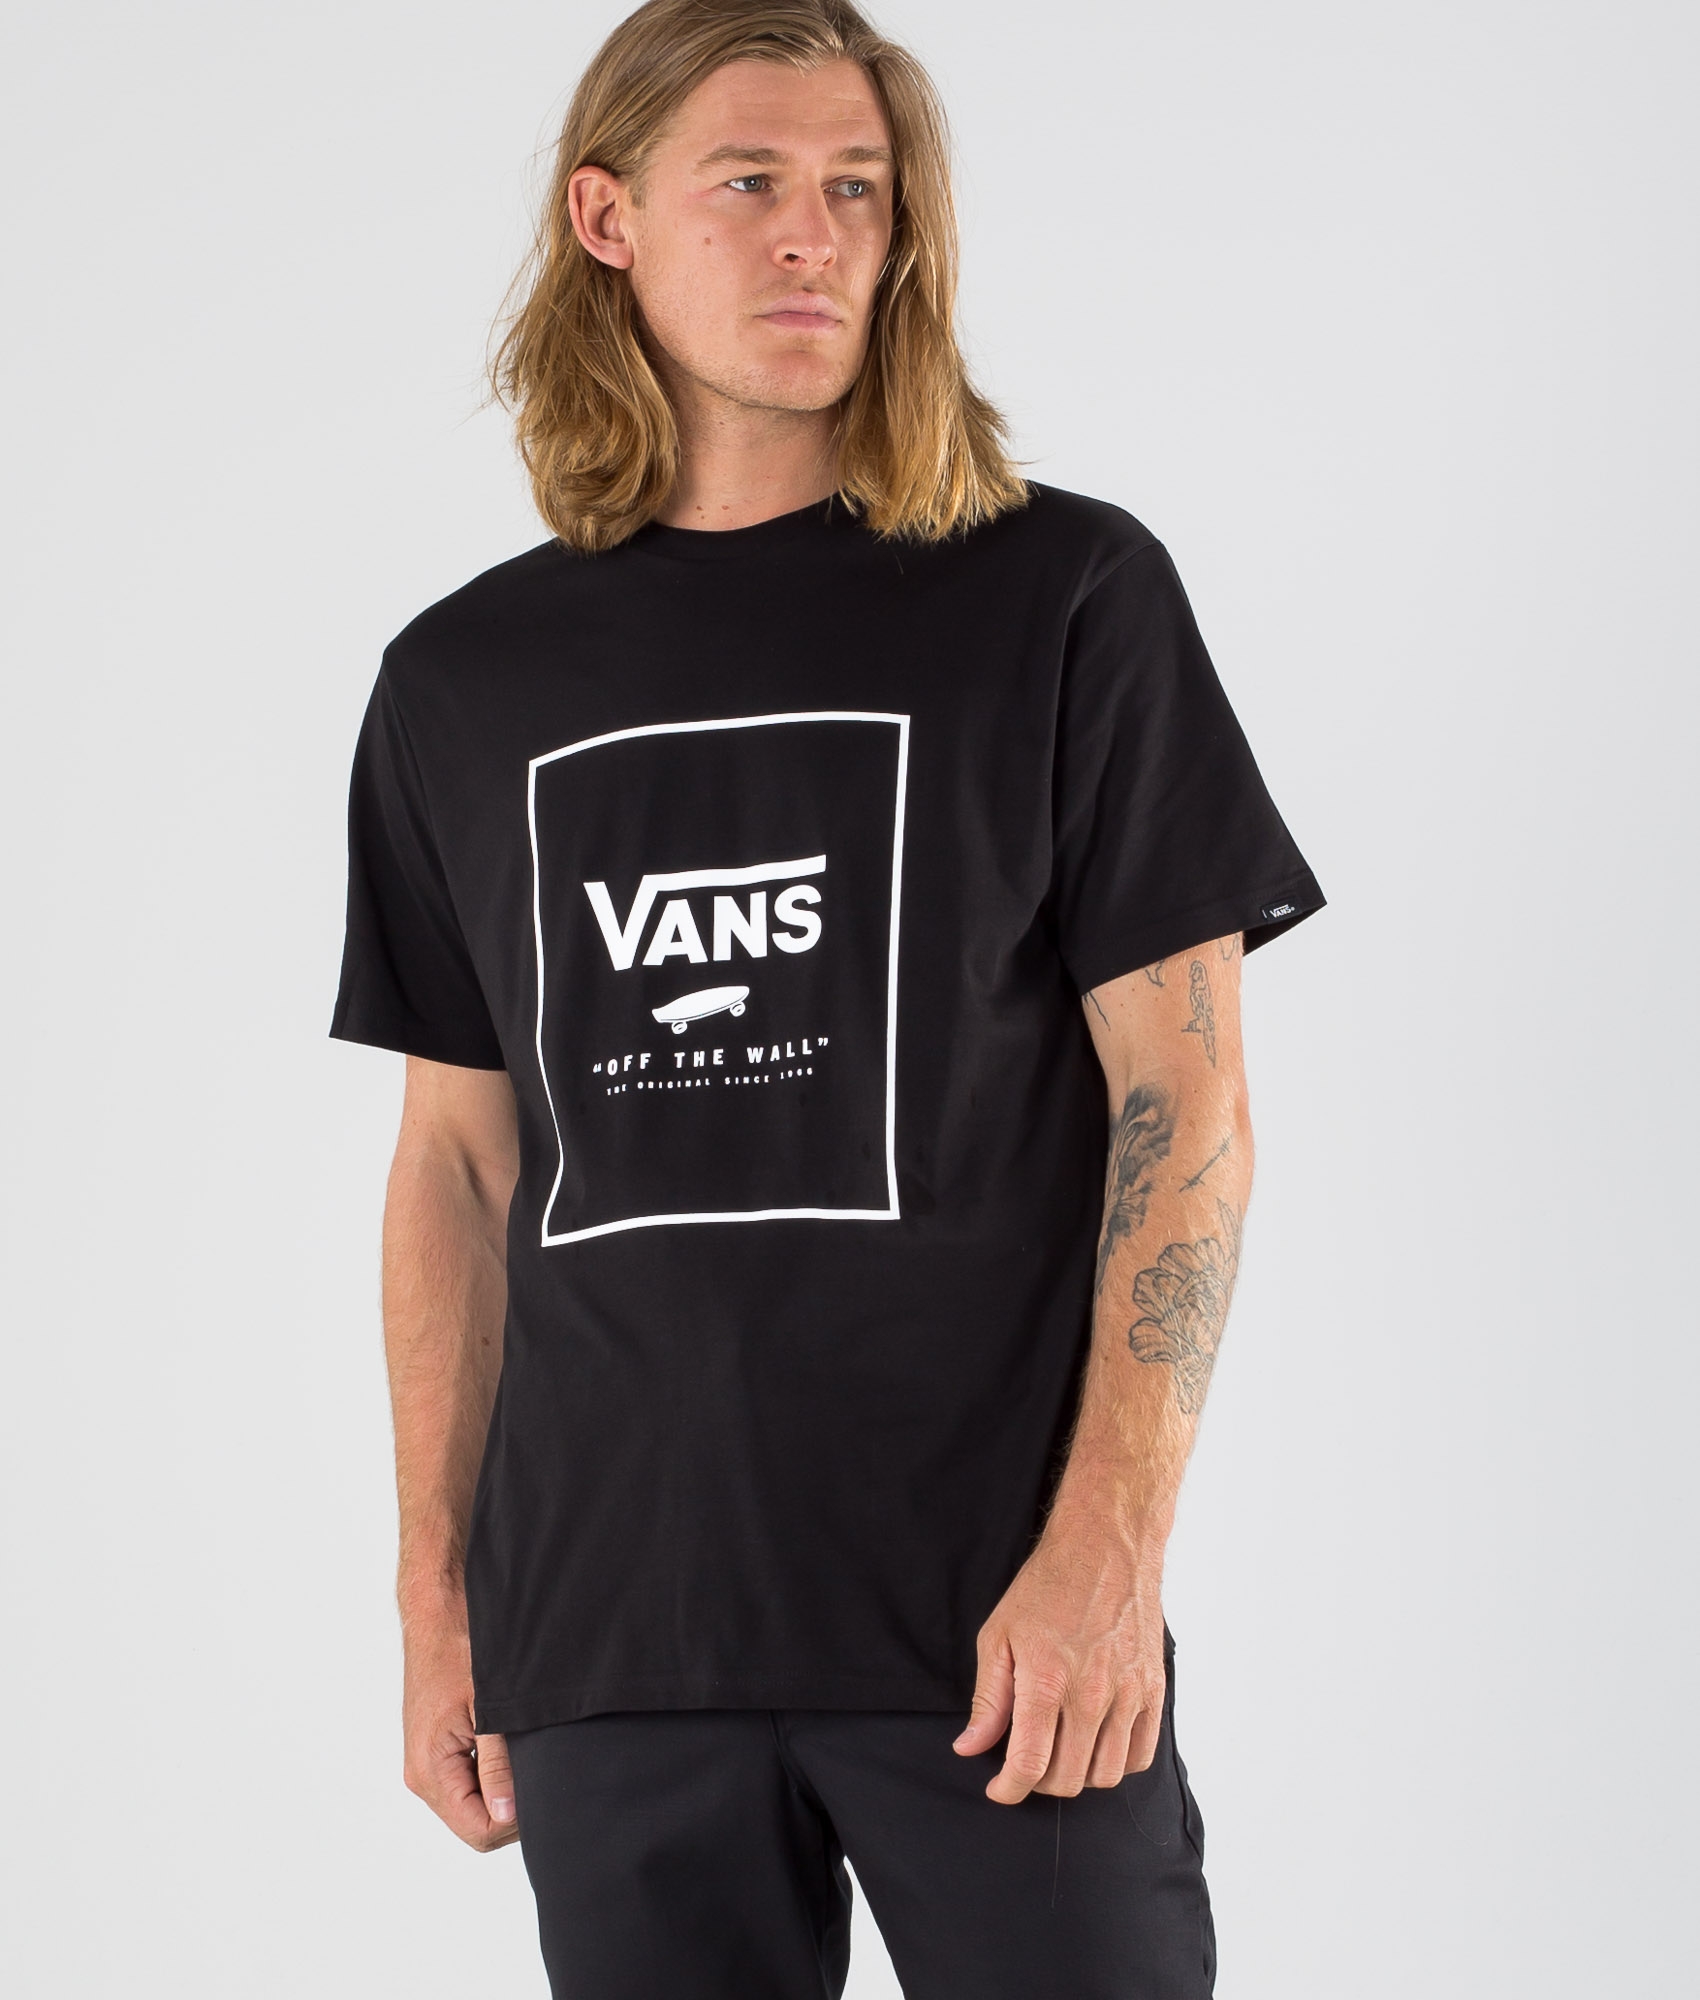 vans t shirt black and white